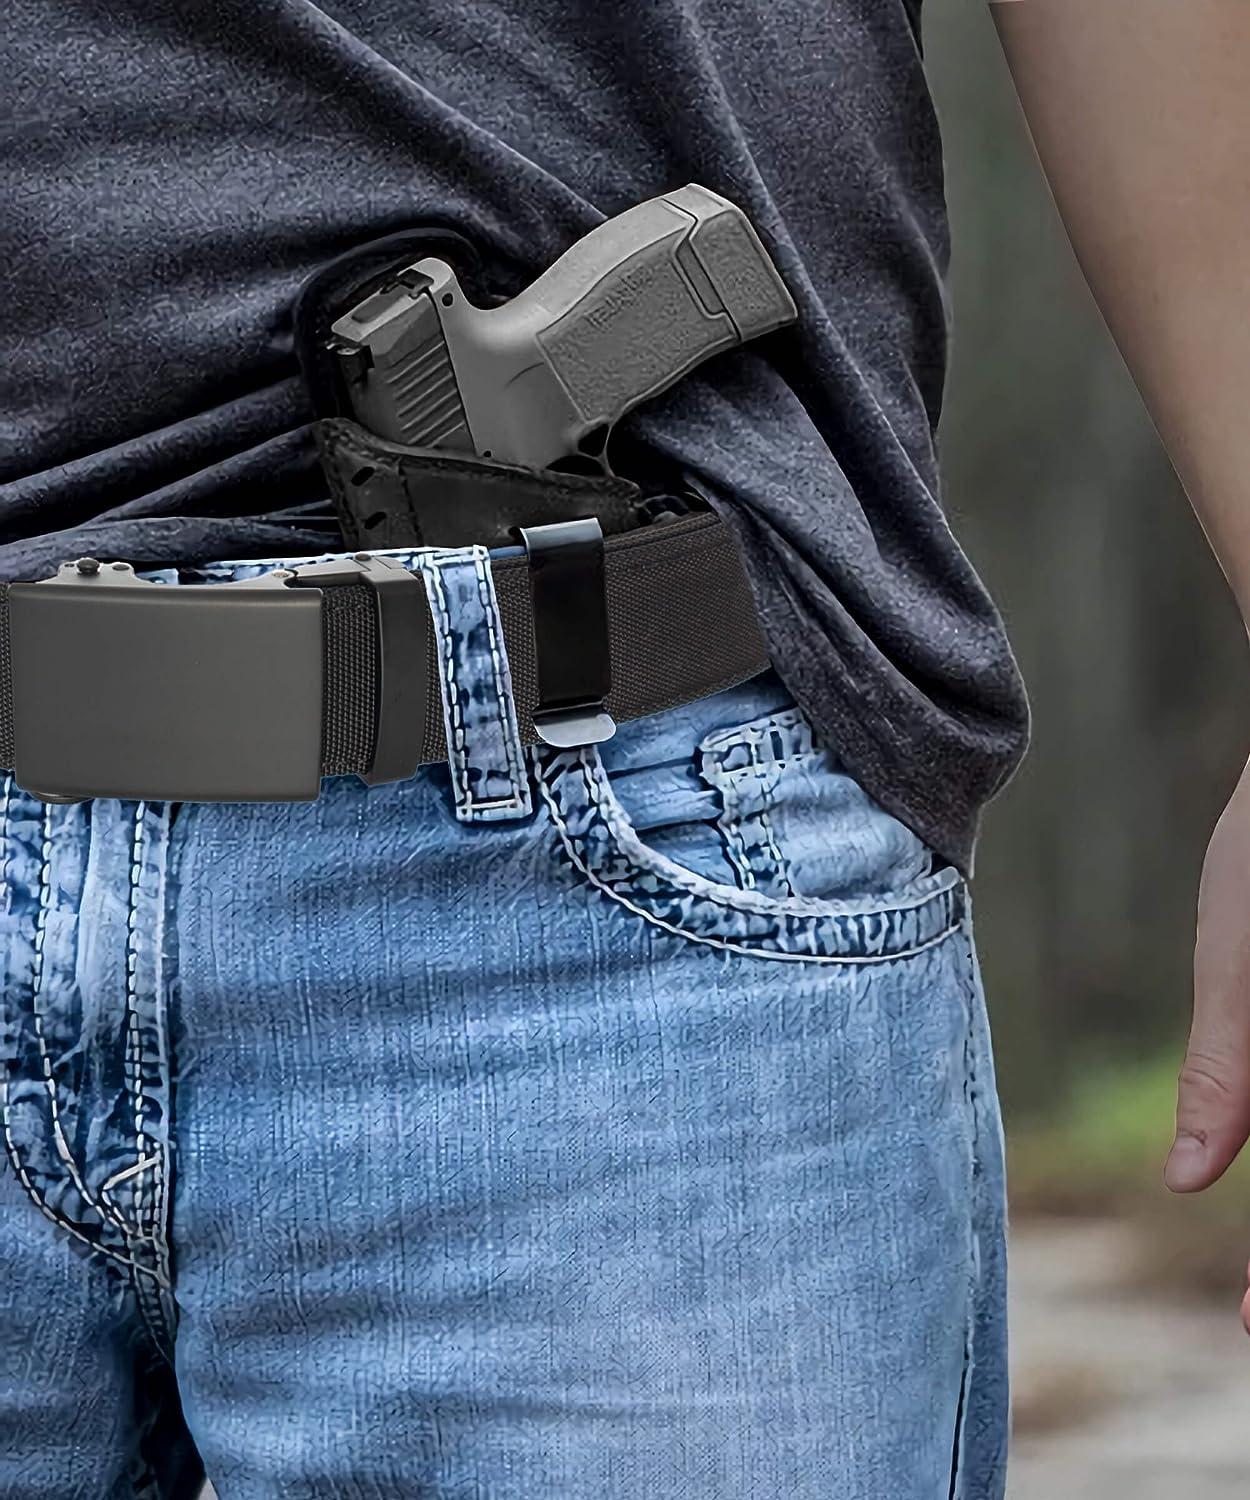 IBYADO Gun Belt, EDC Belt, Sturdy Concealed Carry Belt with ratchet buckle  Reinforced Nylon Tactical Belt 37-41